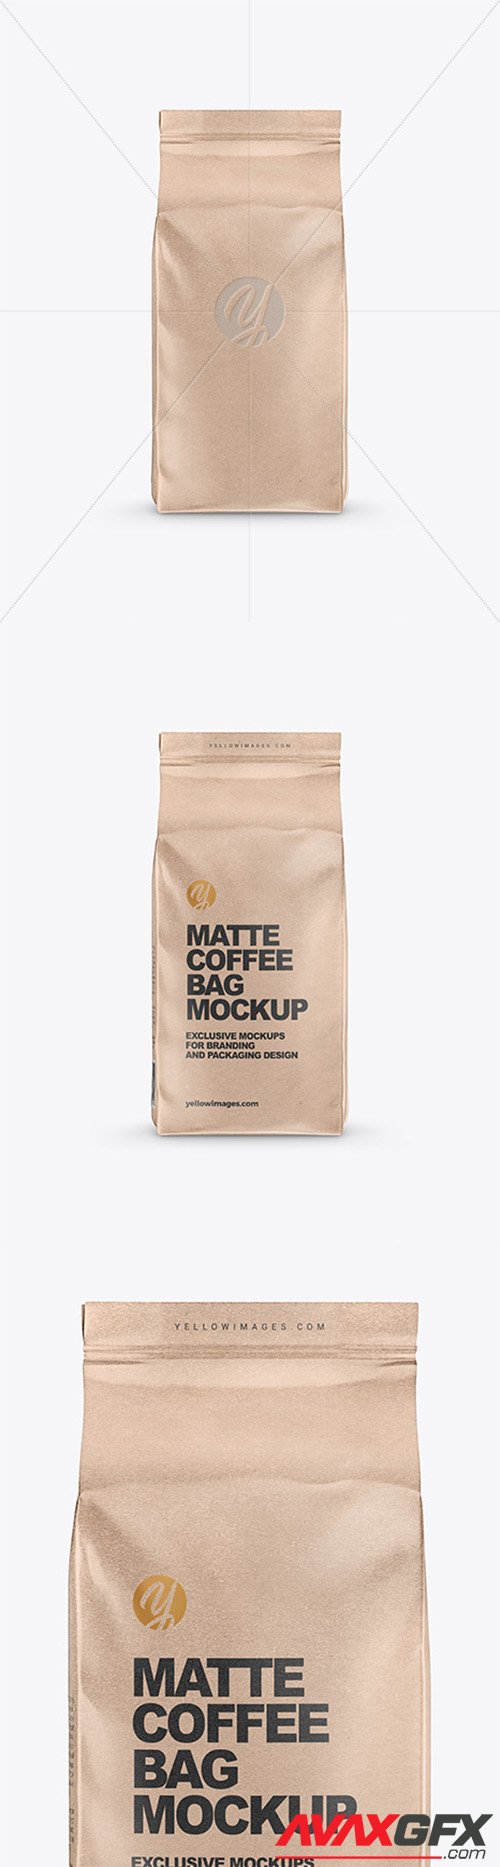 Download Kraft Coffee Bag Mockup 61225 » AVAXGFX - All Downloads ...